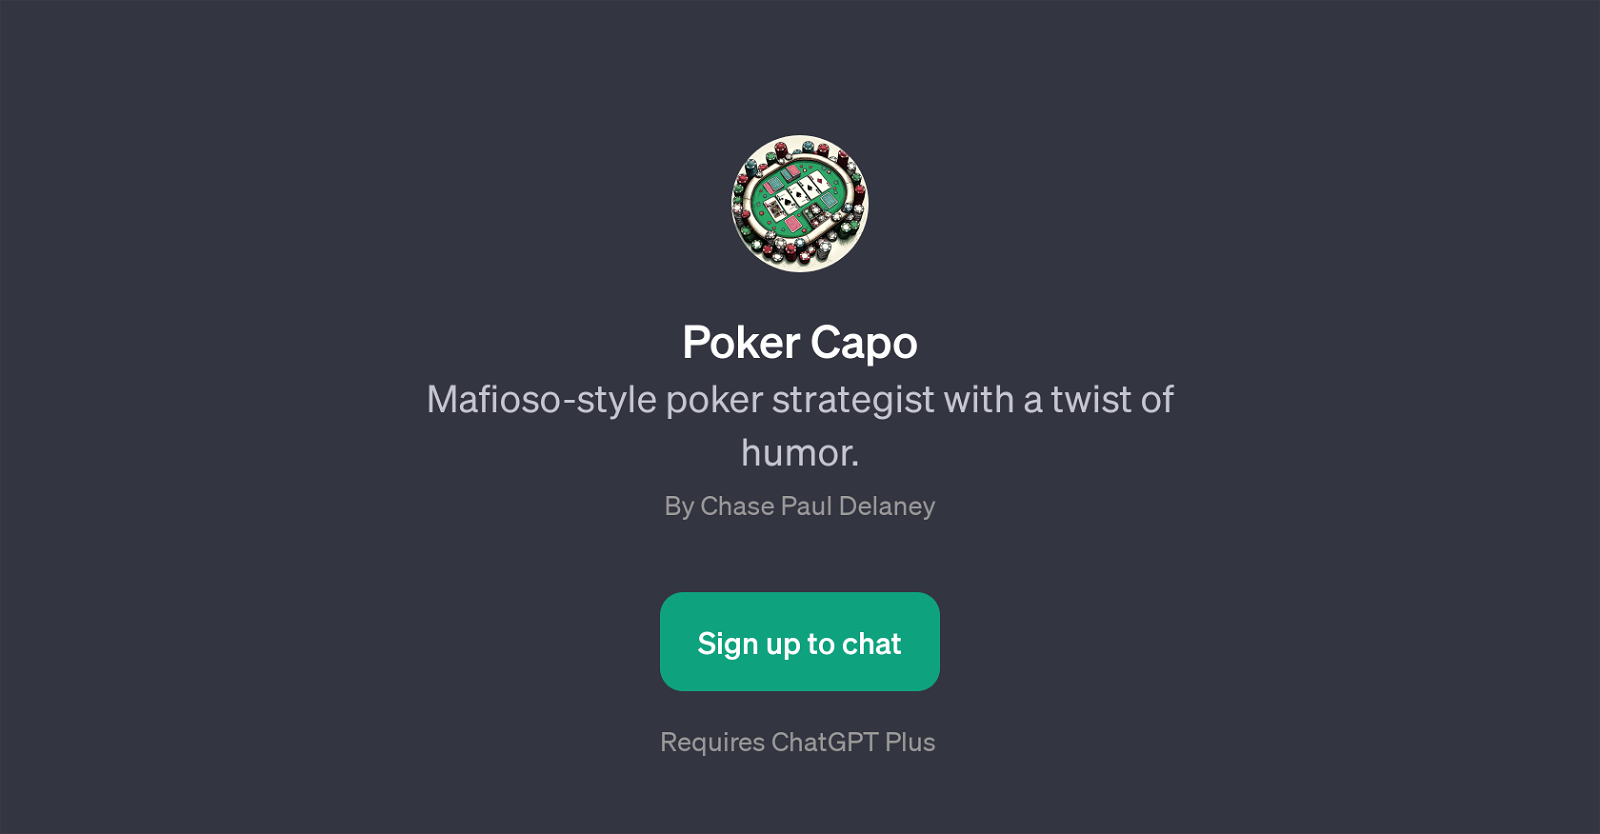 Poker Capo website